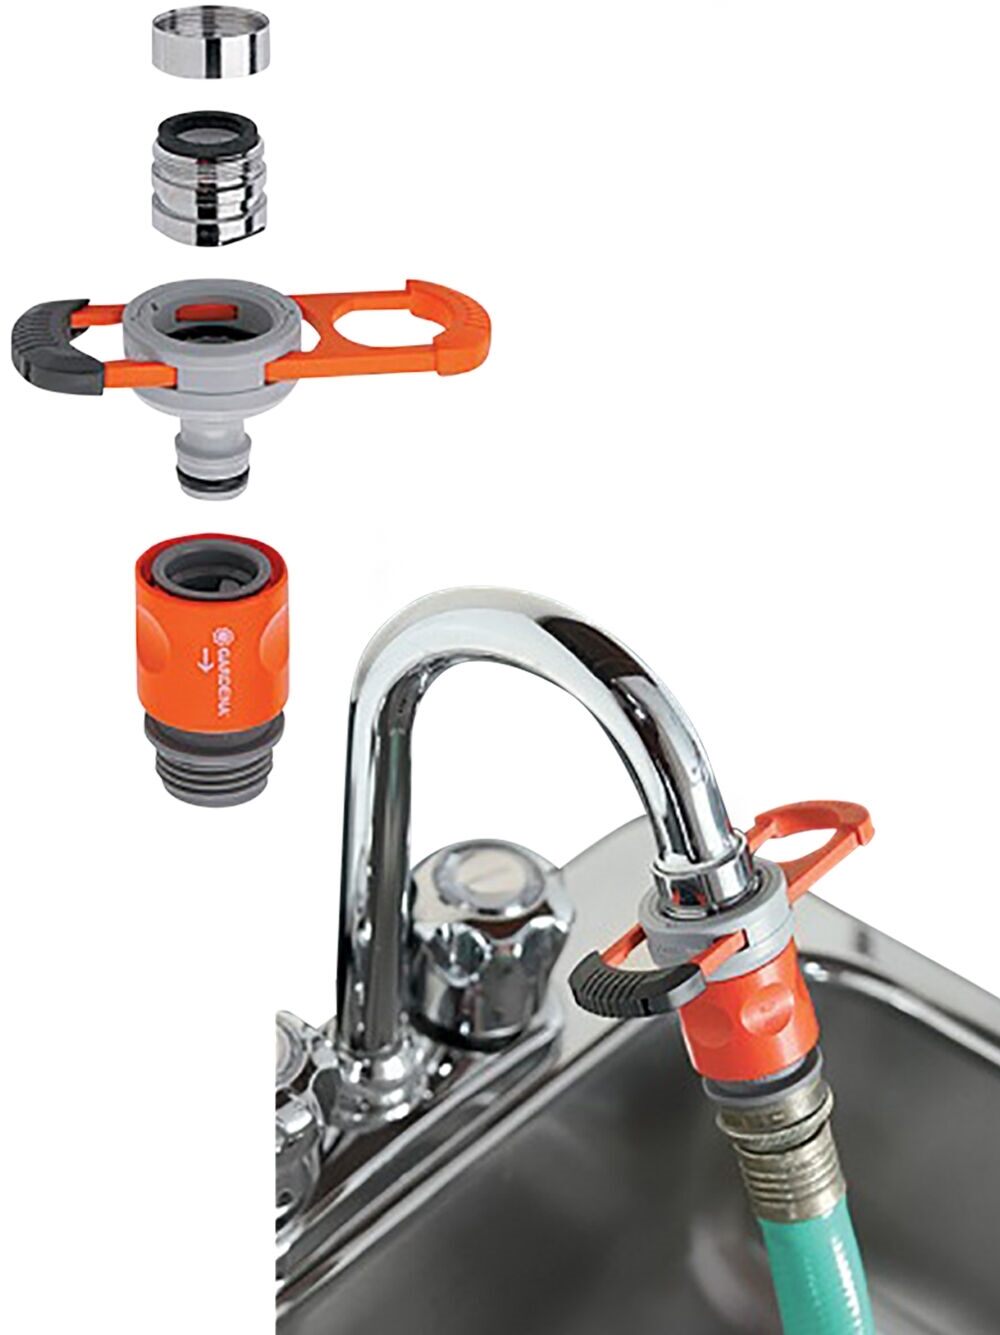 Sink Faucet To Garden Hose Adapter, Kitchen Tap Adapter For Garden Hose